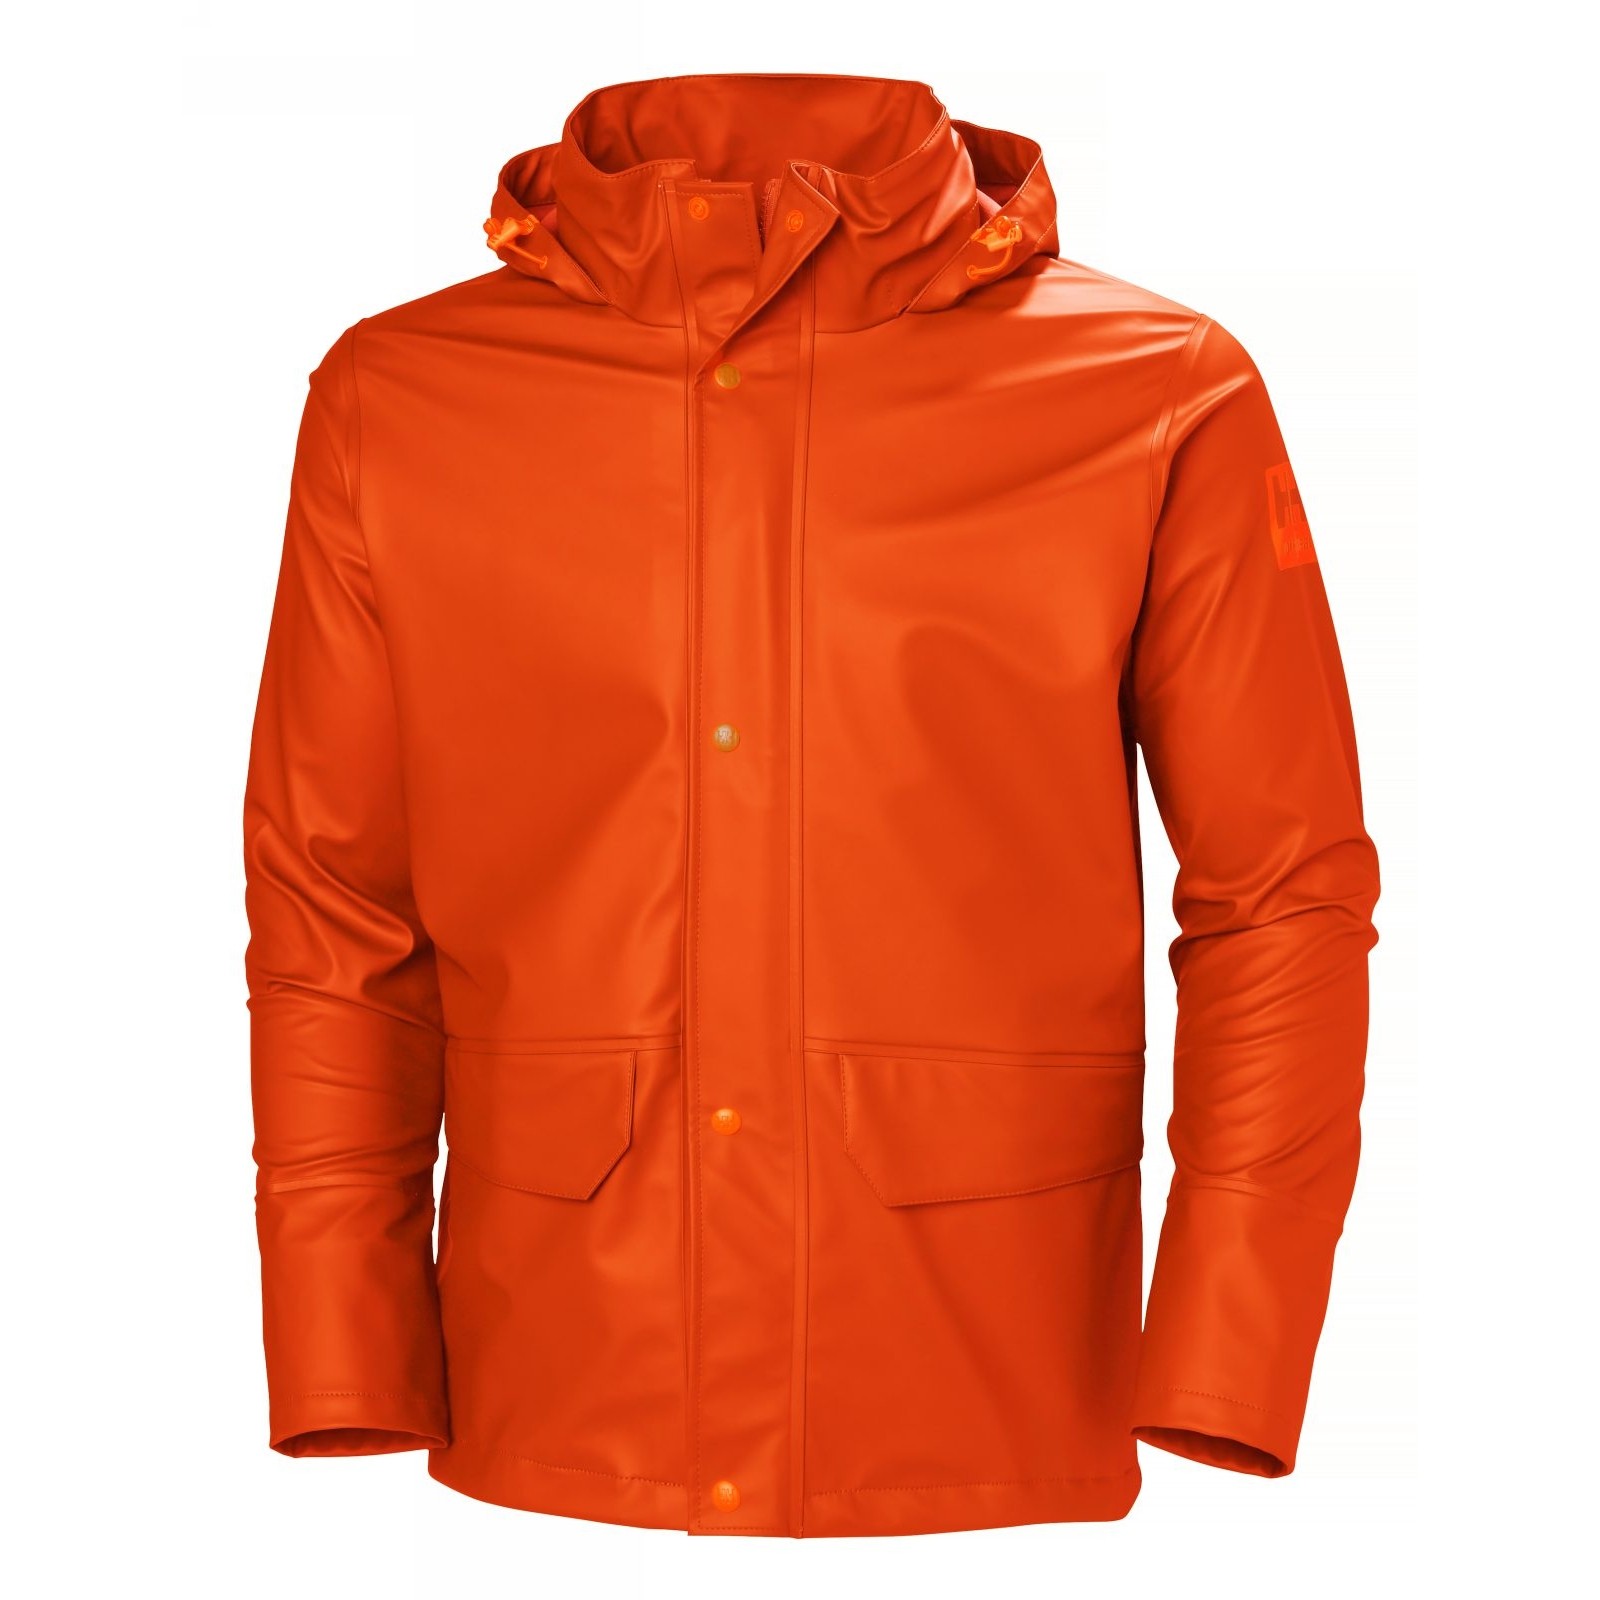 Куртка водонепроницаемая оранжевая Helly Hansen Gale Rain размер XXXL, Osculati 24.502.16